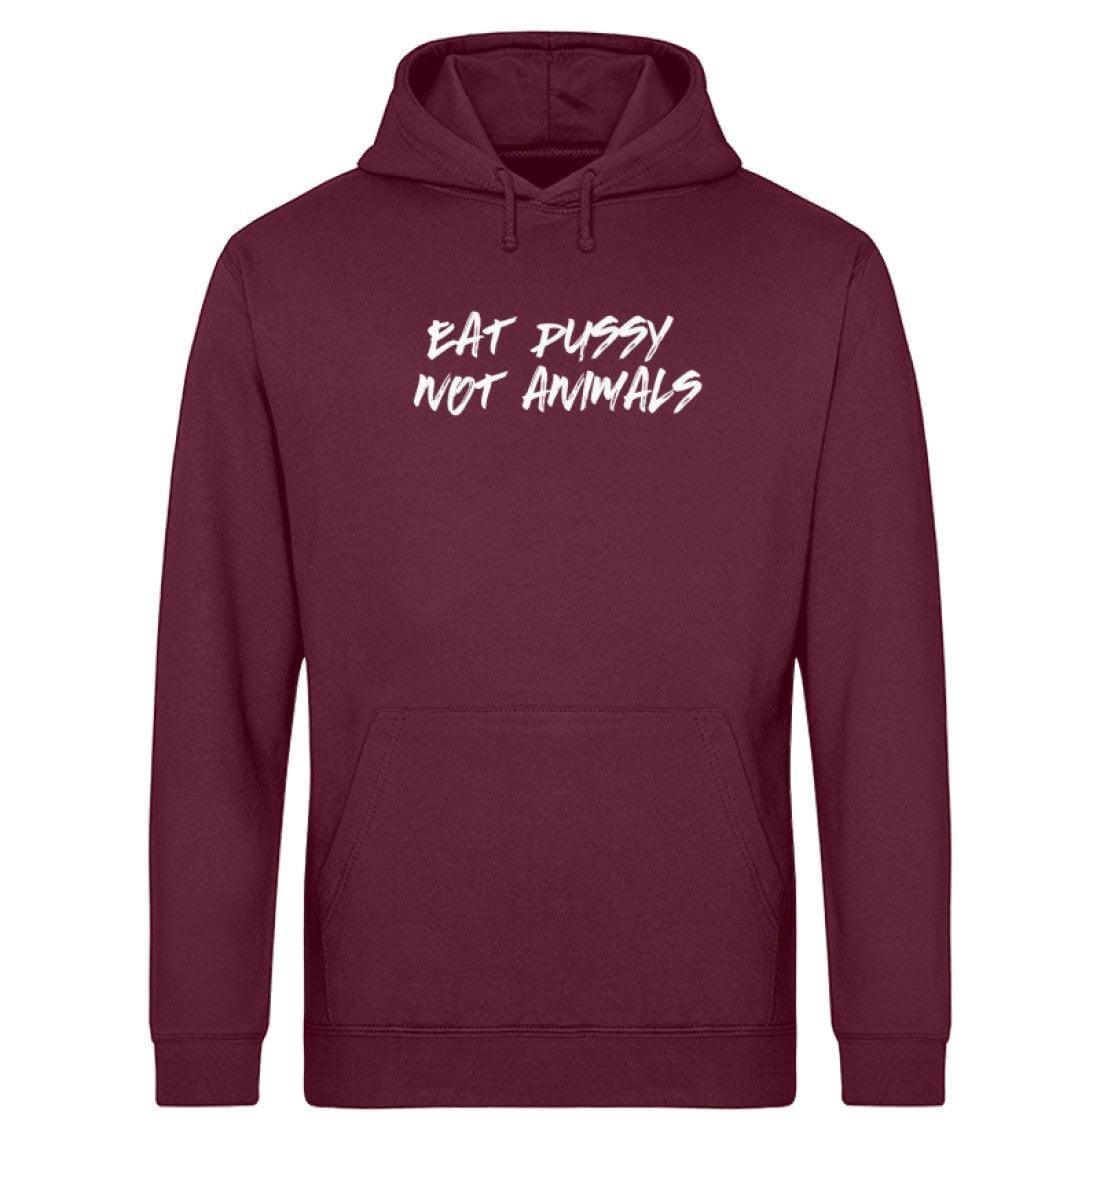 Eat pussy not animals - Unisex Organic Hoodie - Team Vegan © vegan t shirt